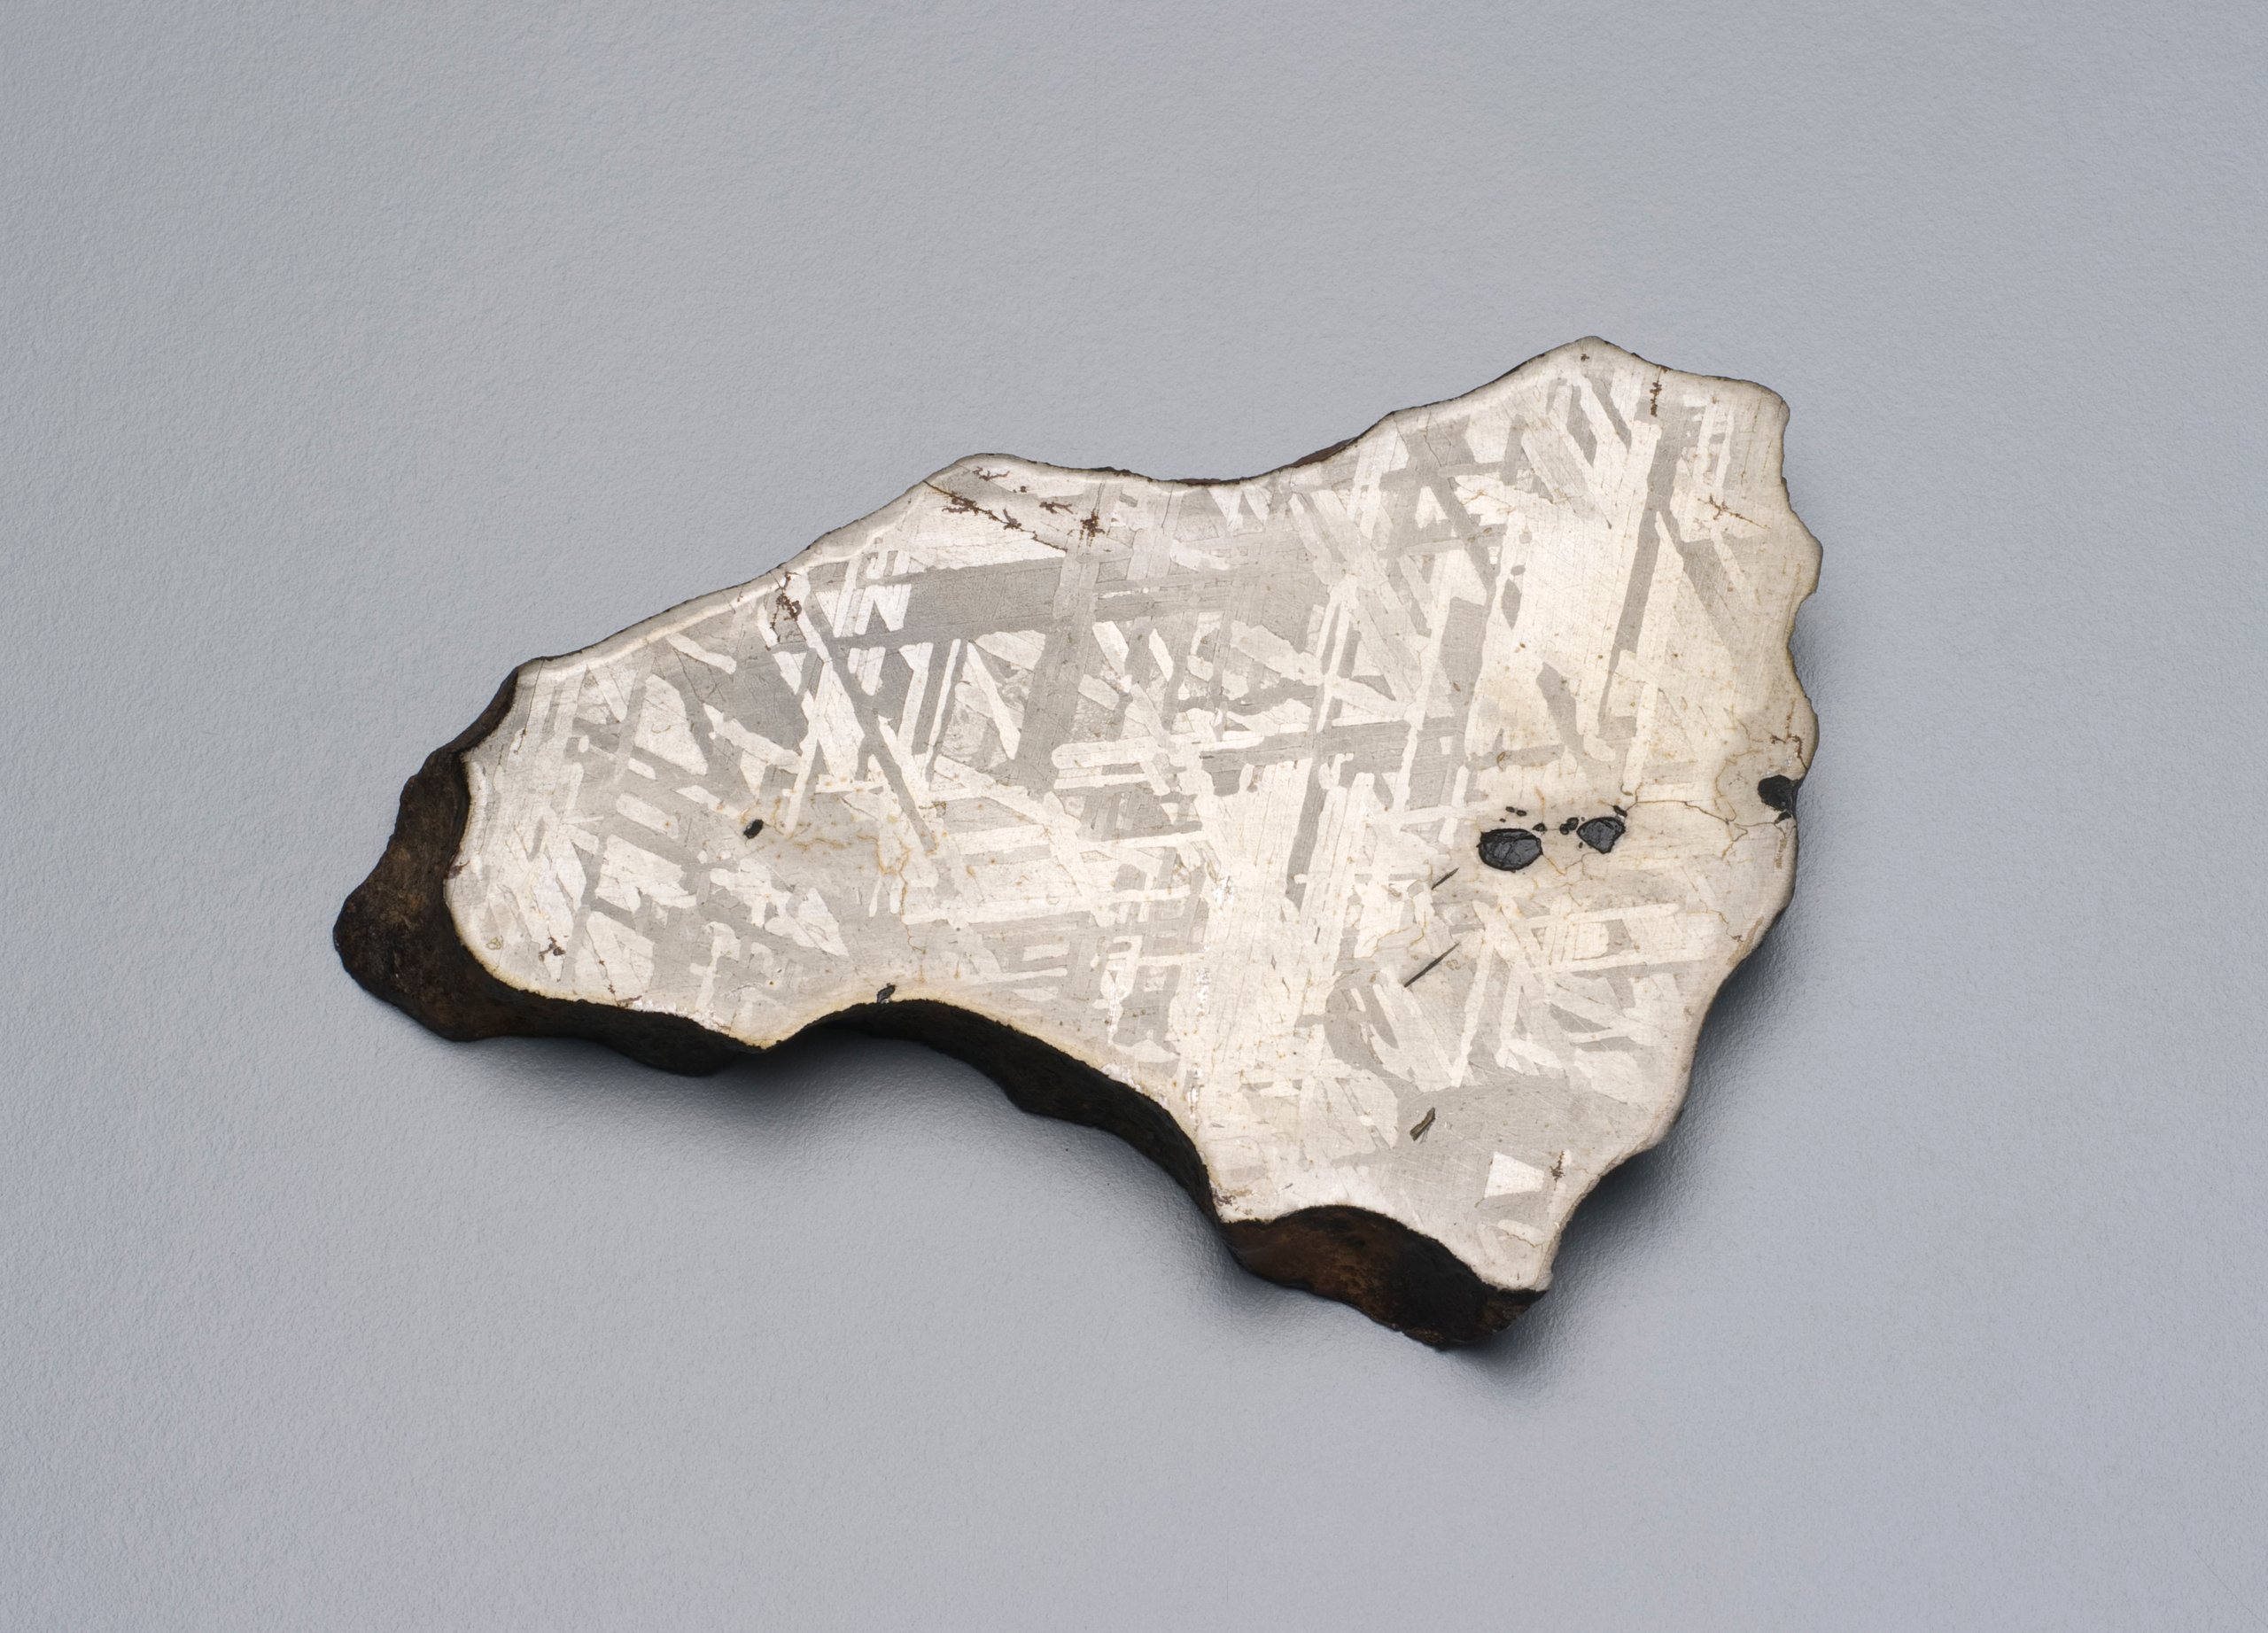 Meteorite fragment from the Henbury meteorite craters